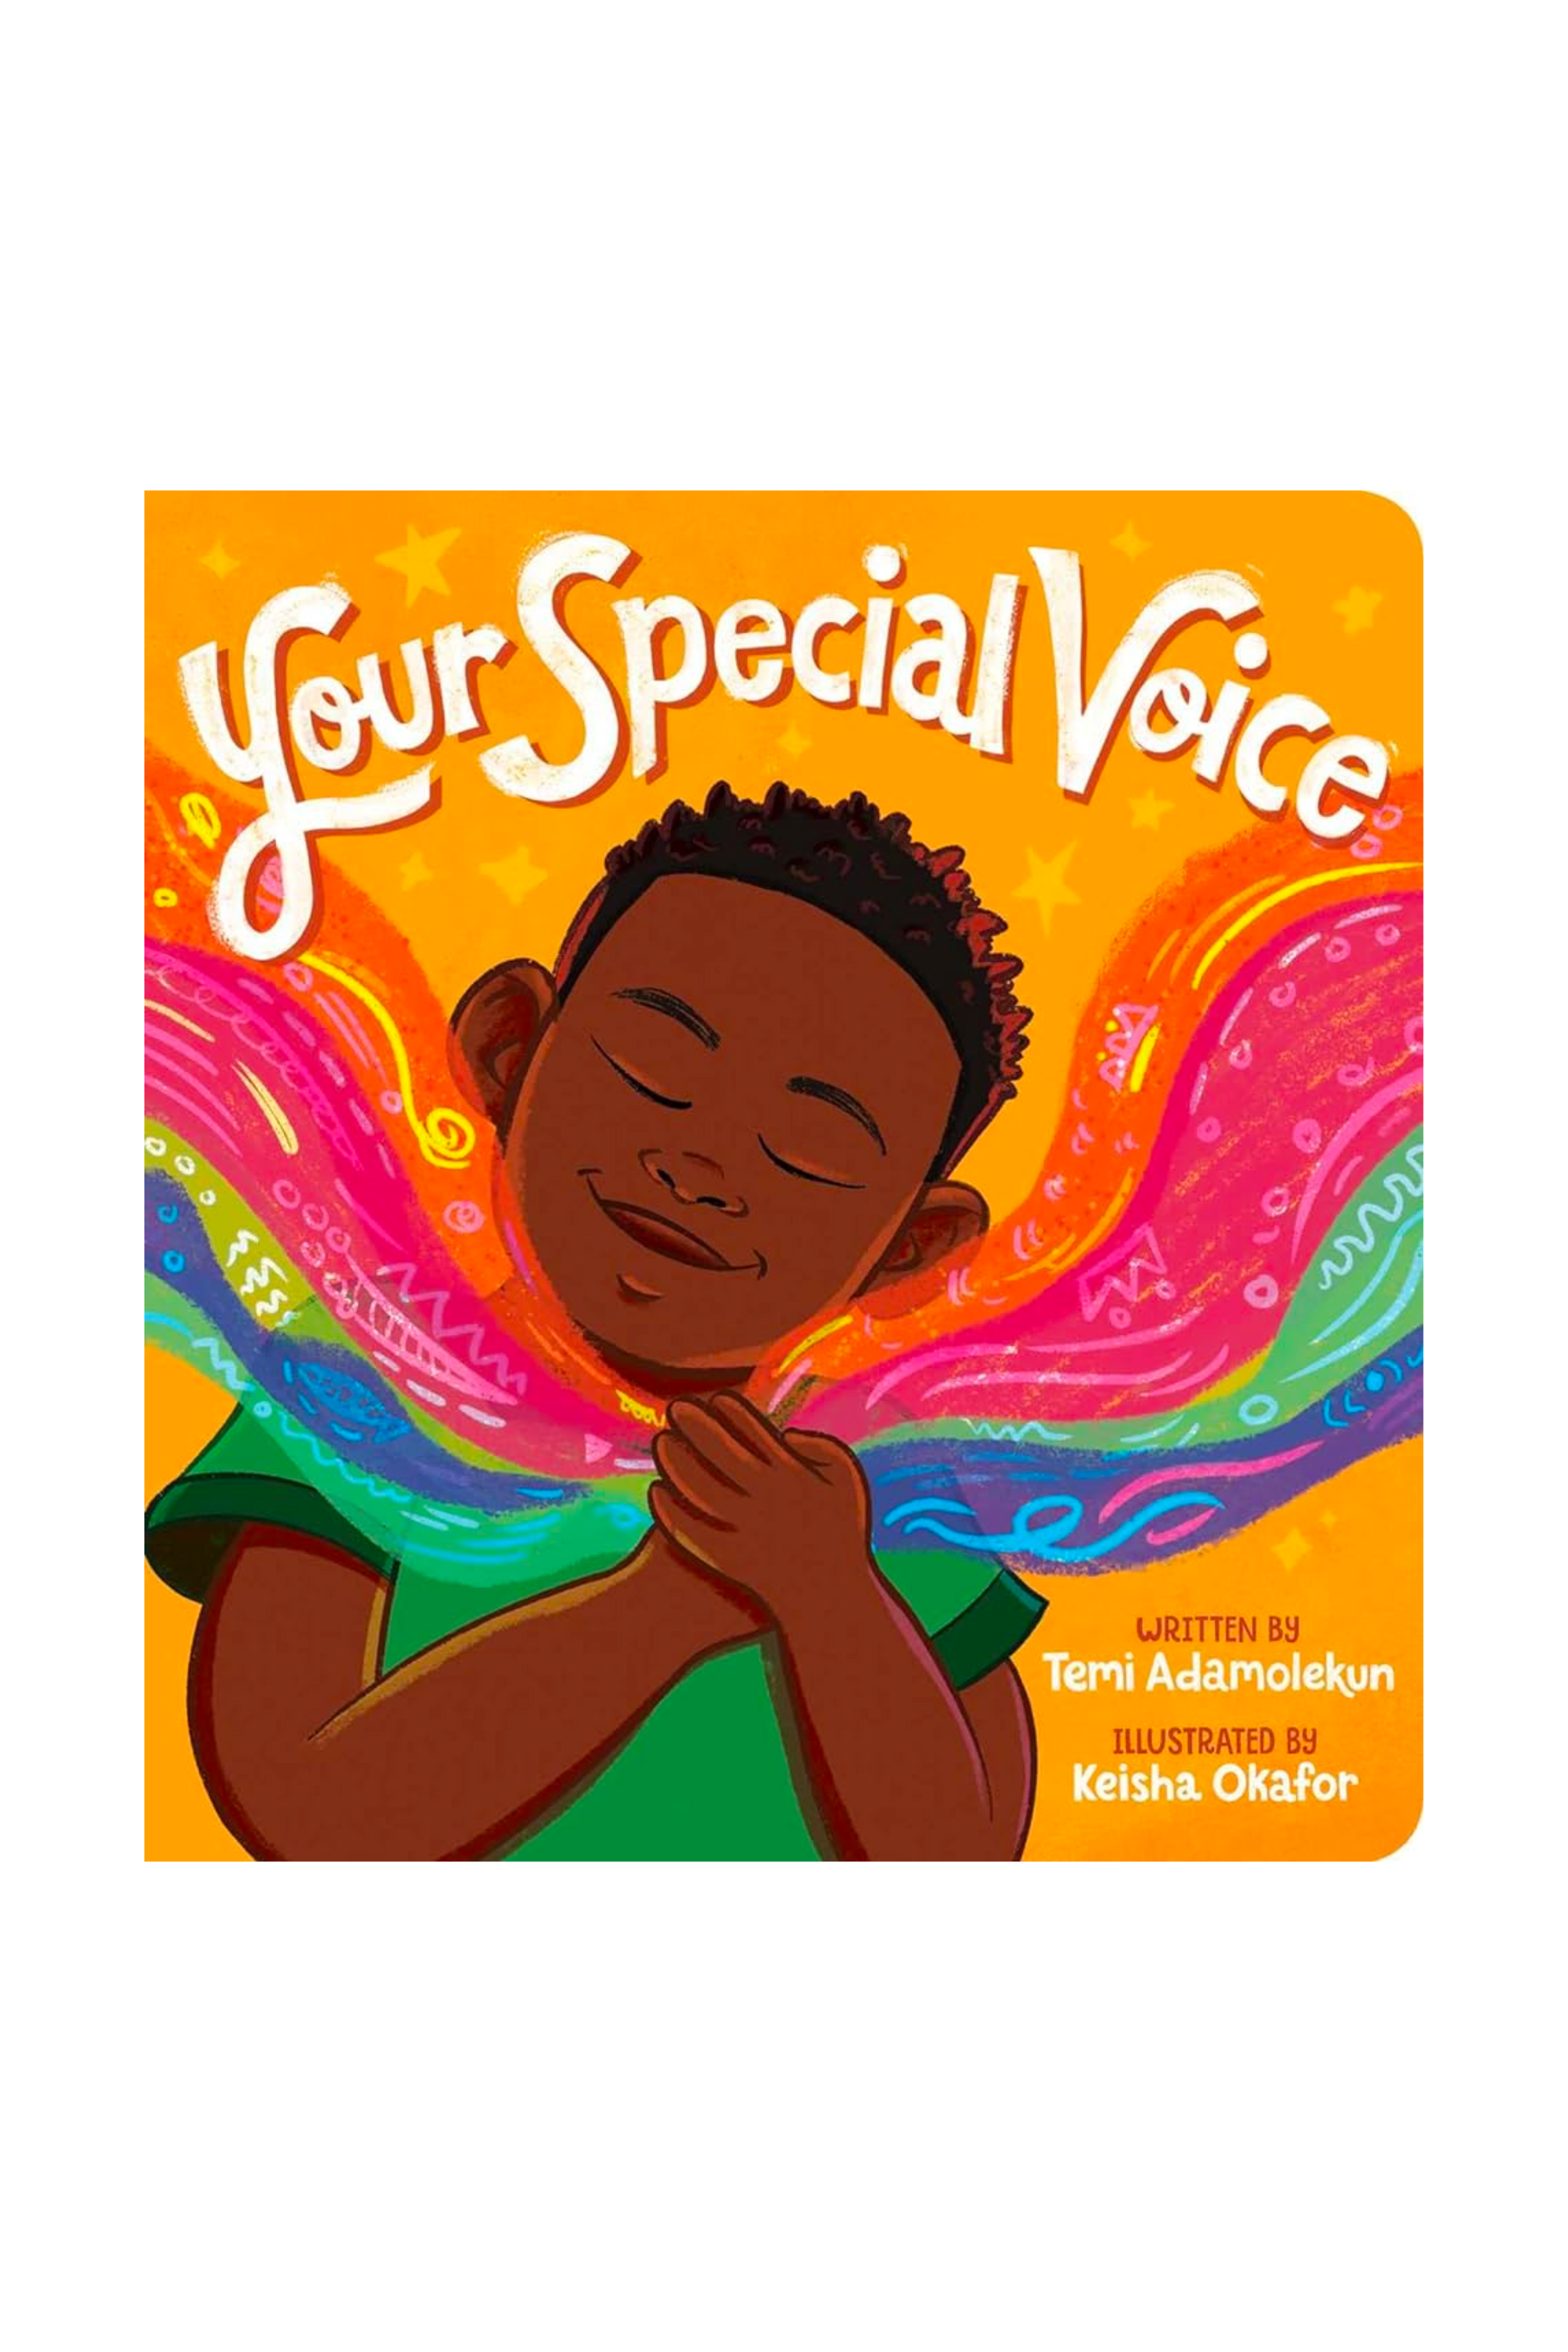 "Your Special Voice" Book by Temi Adamolekun